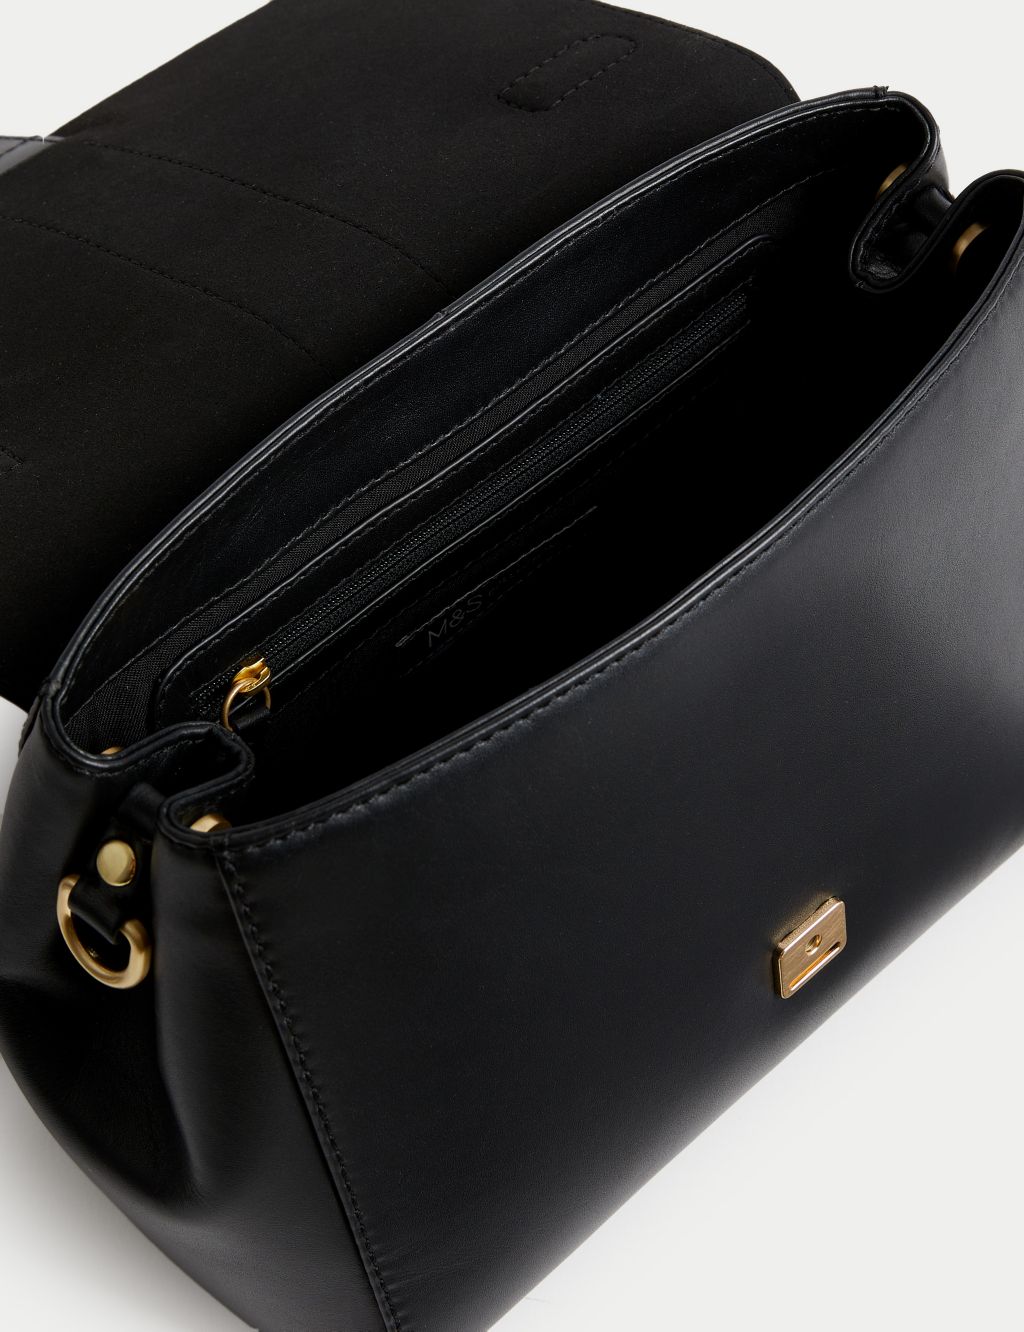 Leather Top Handle Cross Body Bag image 4